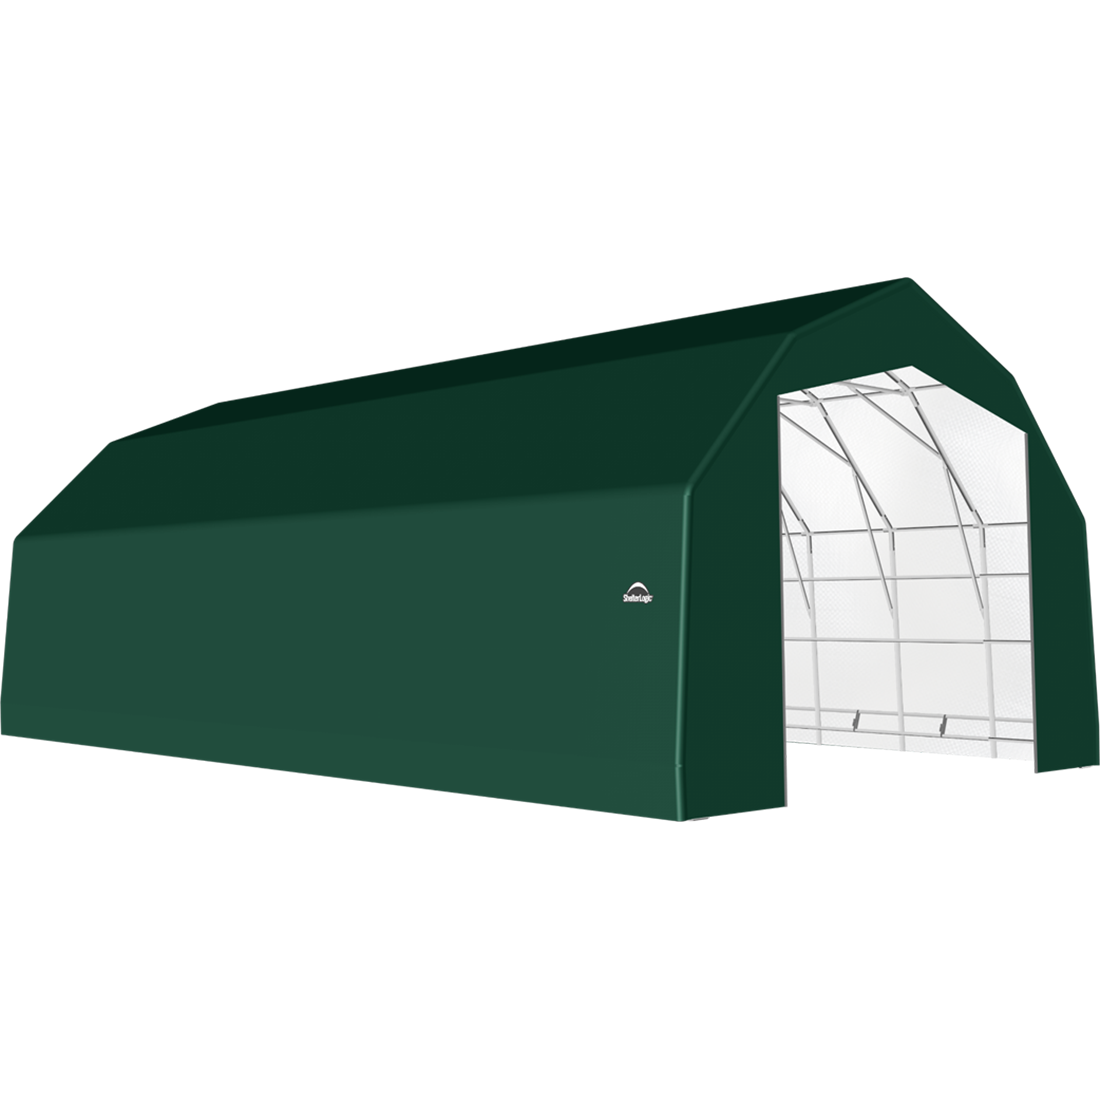 ShelterTech SP Series Barn Shelter, 25 ft. x 44 ft. x 17 ft. Heavy Duty PVC 14.5 oz. Green